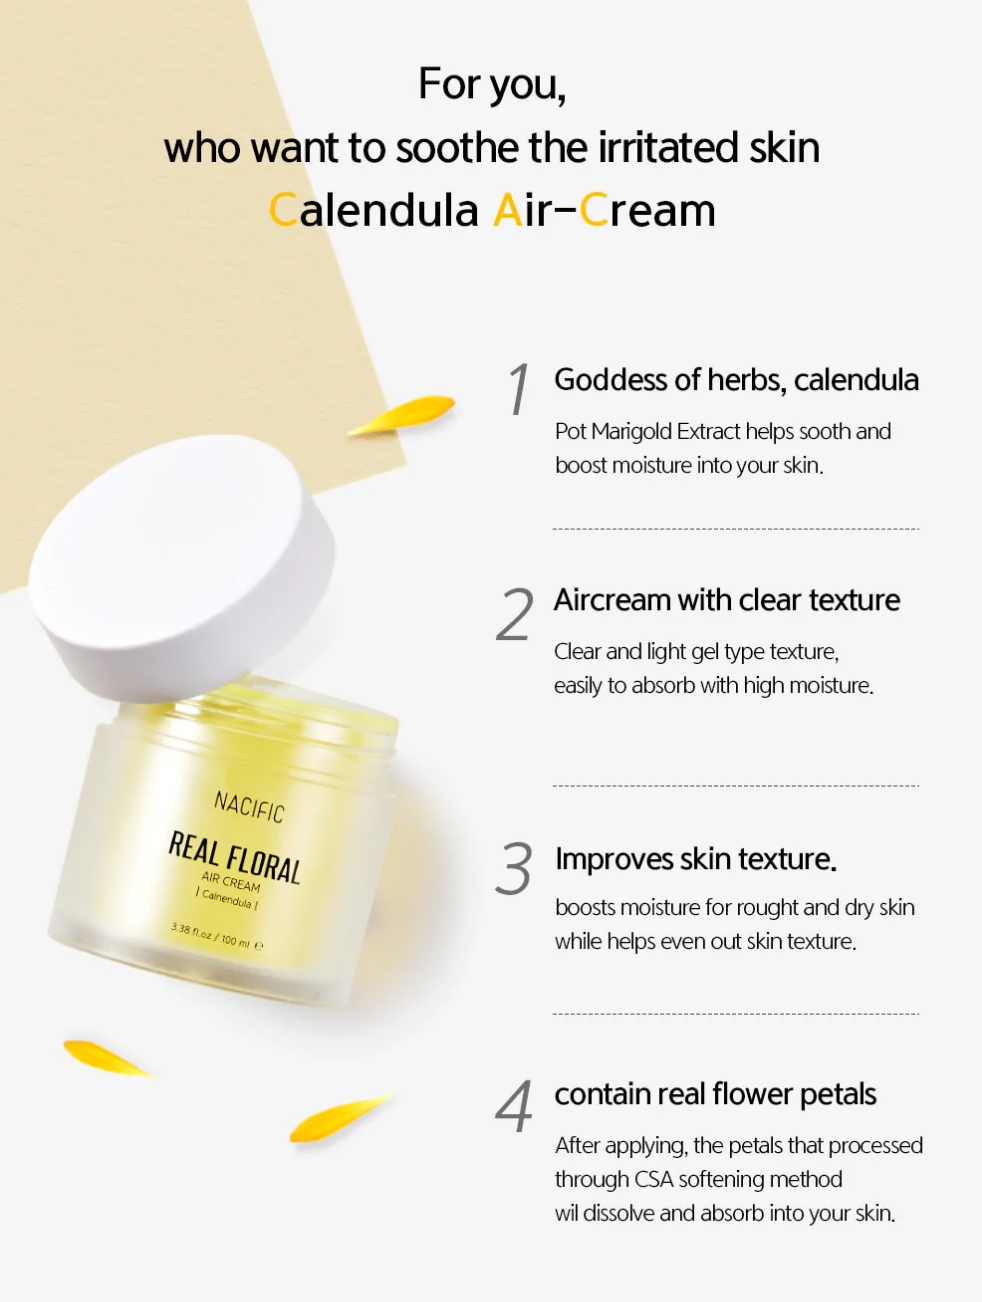 NACIFIC Real Floral Calendula Air Cream (100ml) benefits